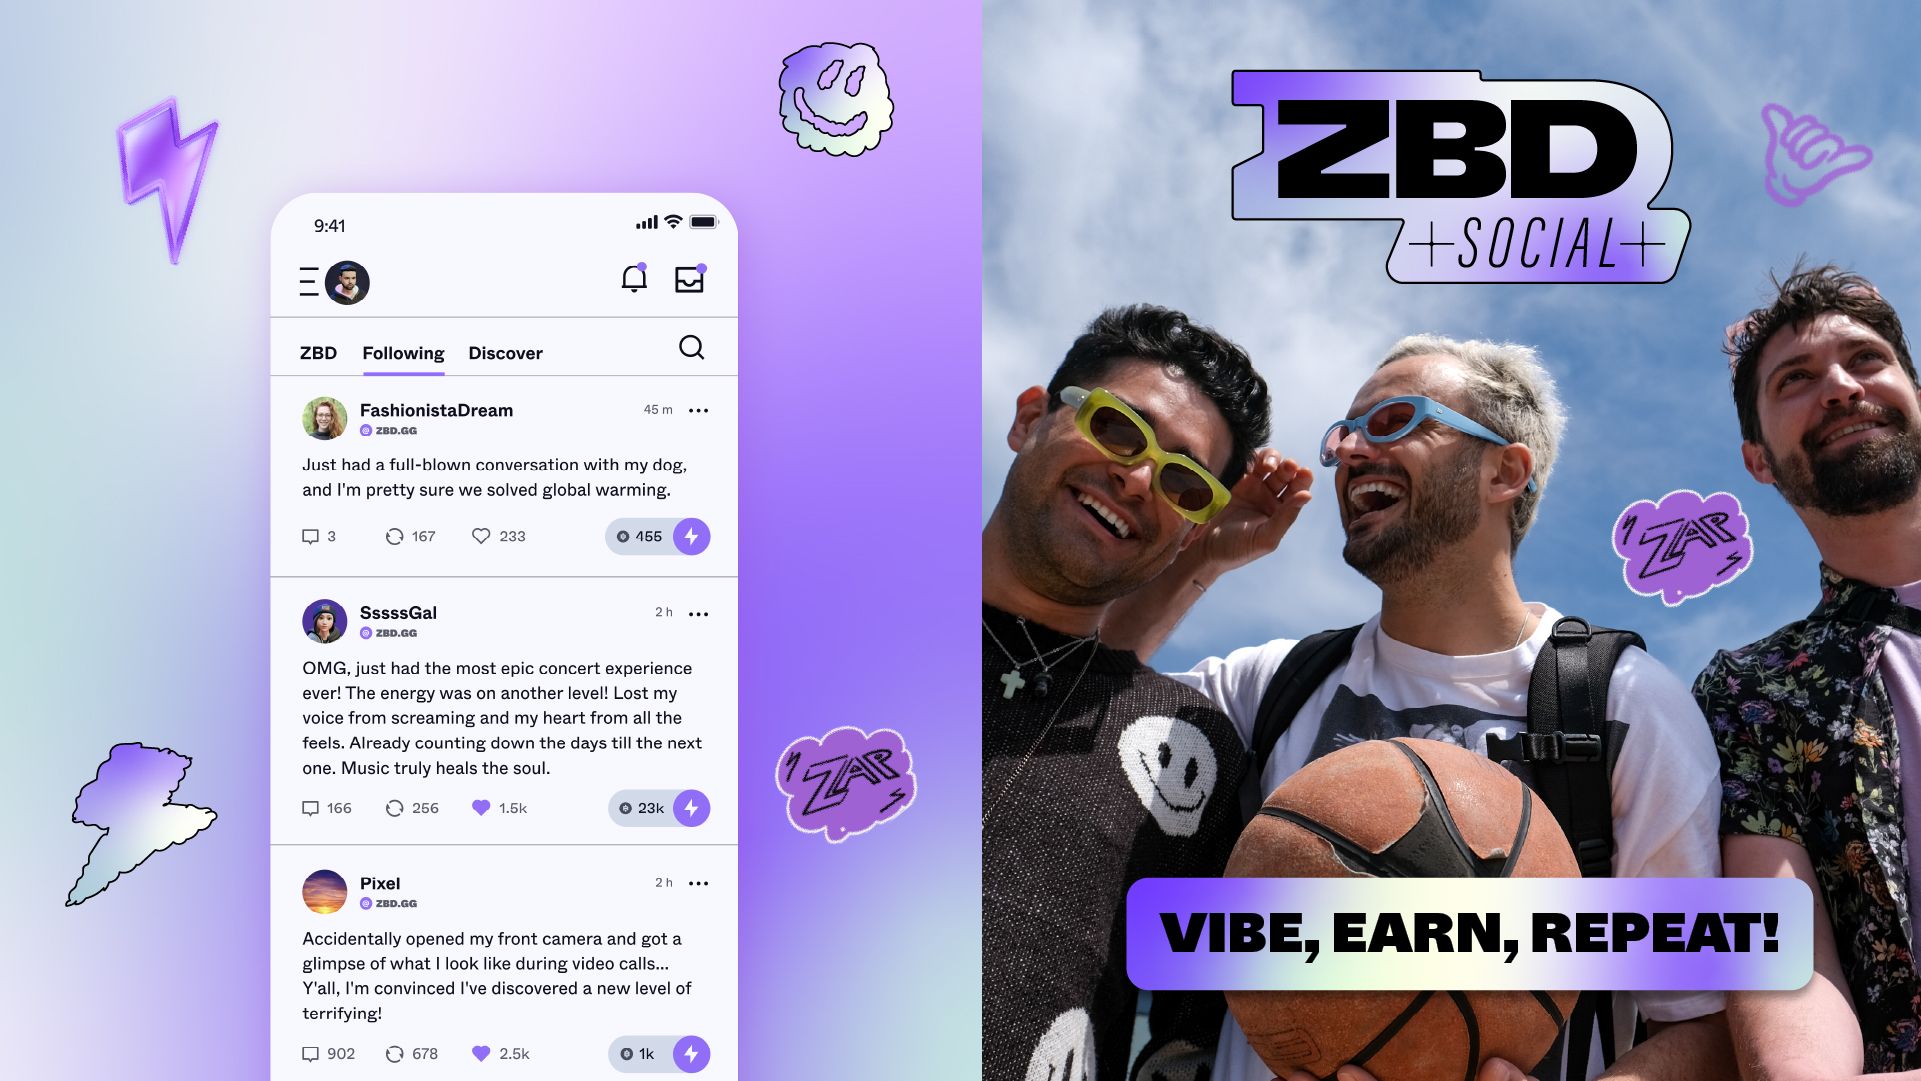 ZBD Social – Vibe, earn, repeat!